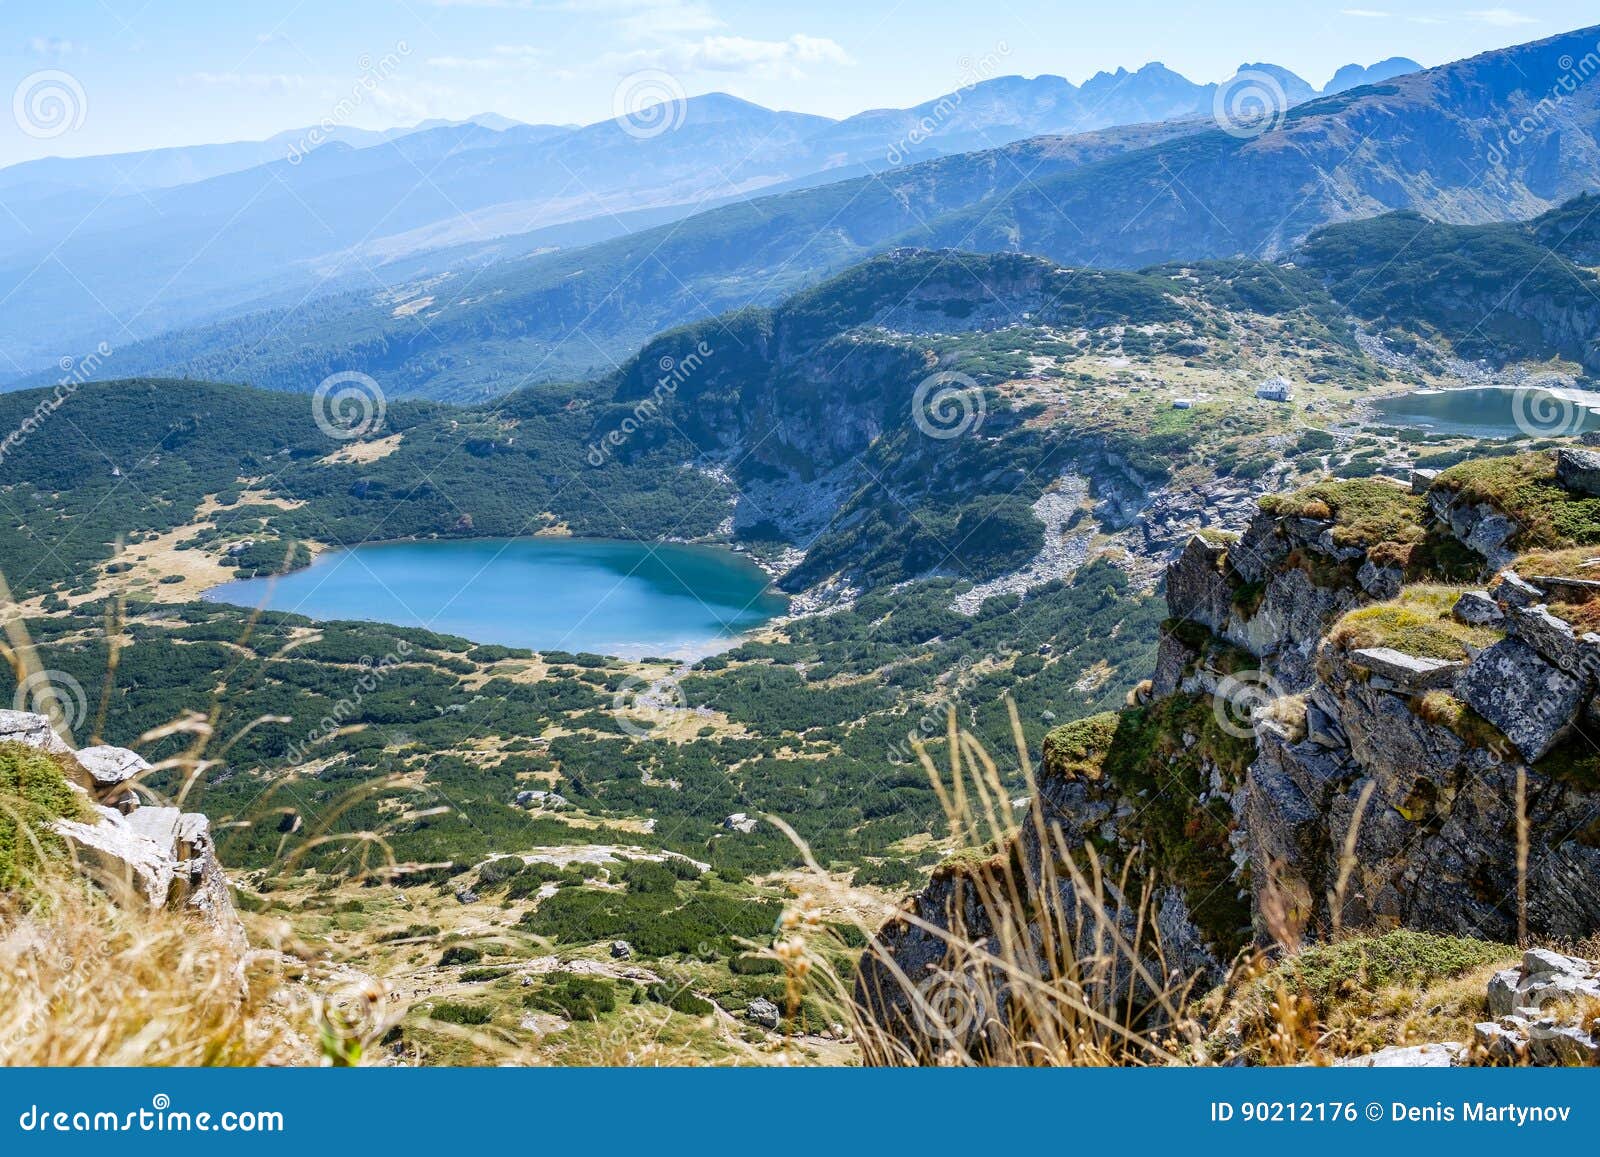 bulgarian mountain nature panorama 2